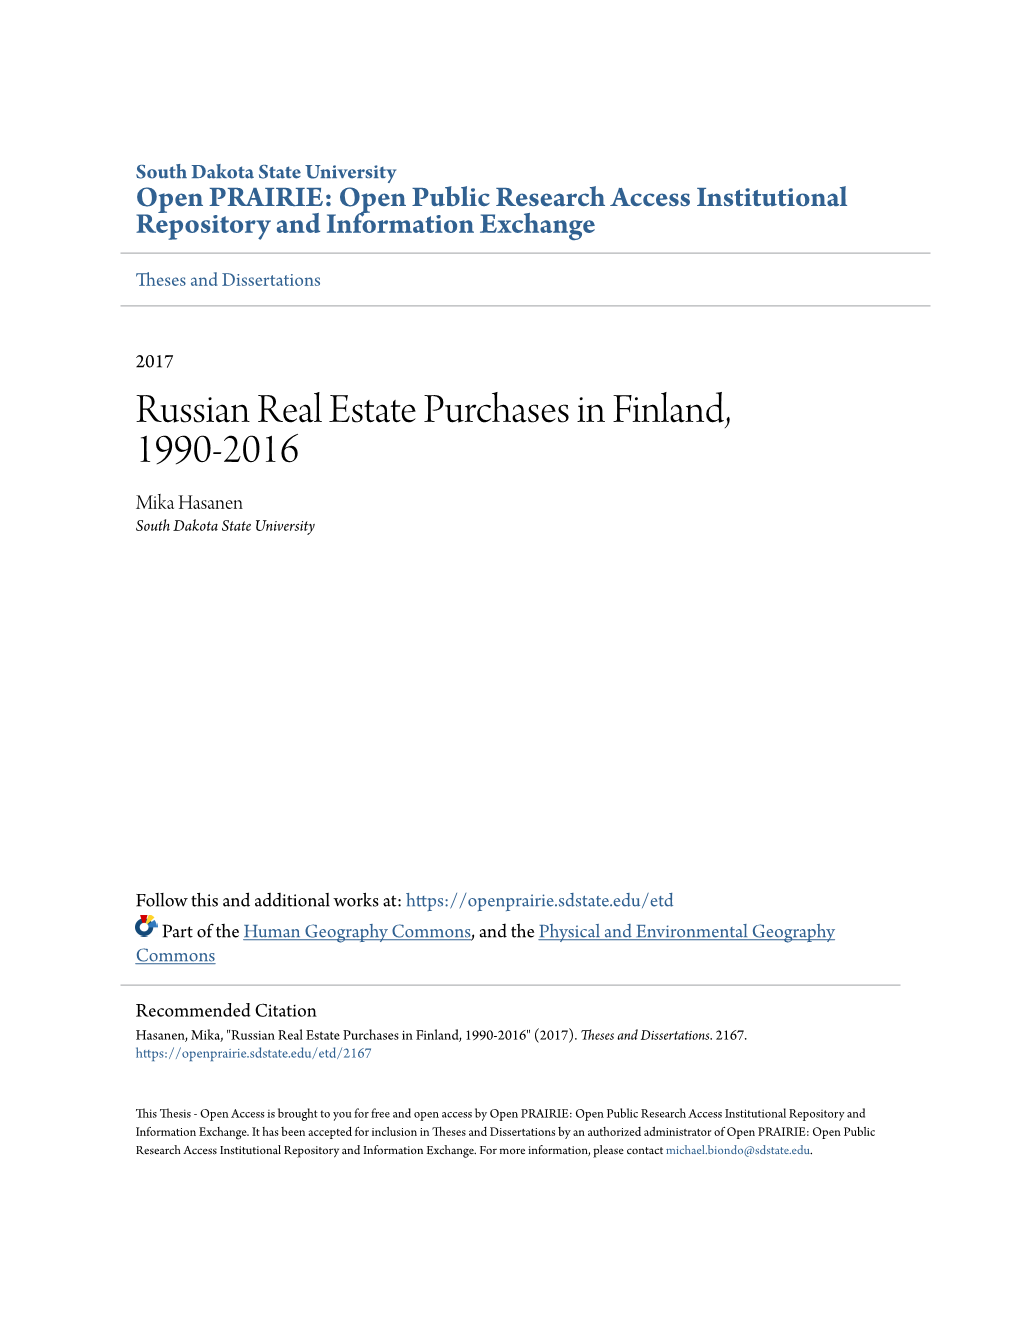 Russian Real Estate Purchases in Finland, 1990-2016 Mika Hasanen South Dakota State University